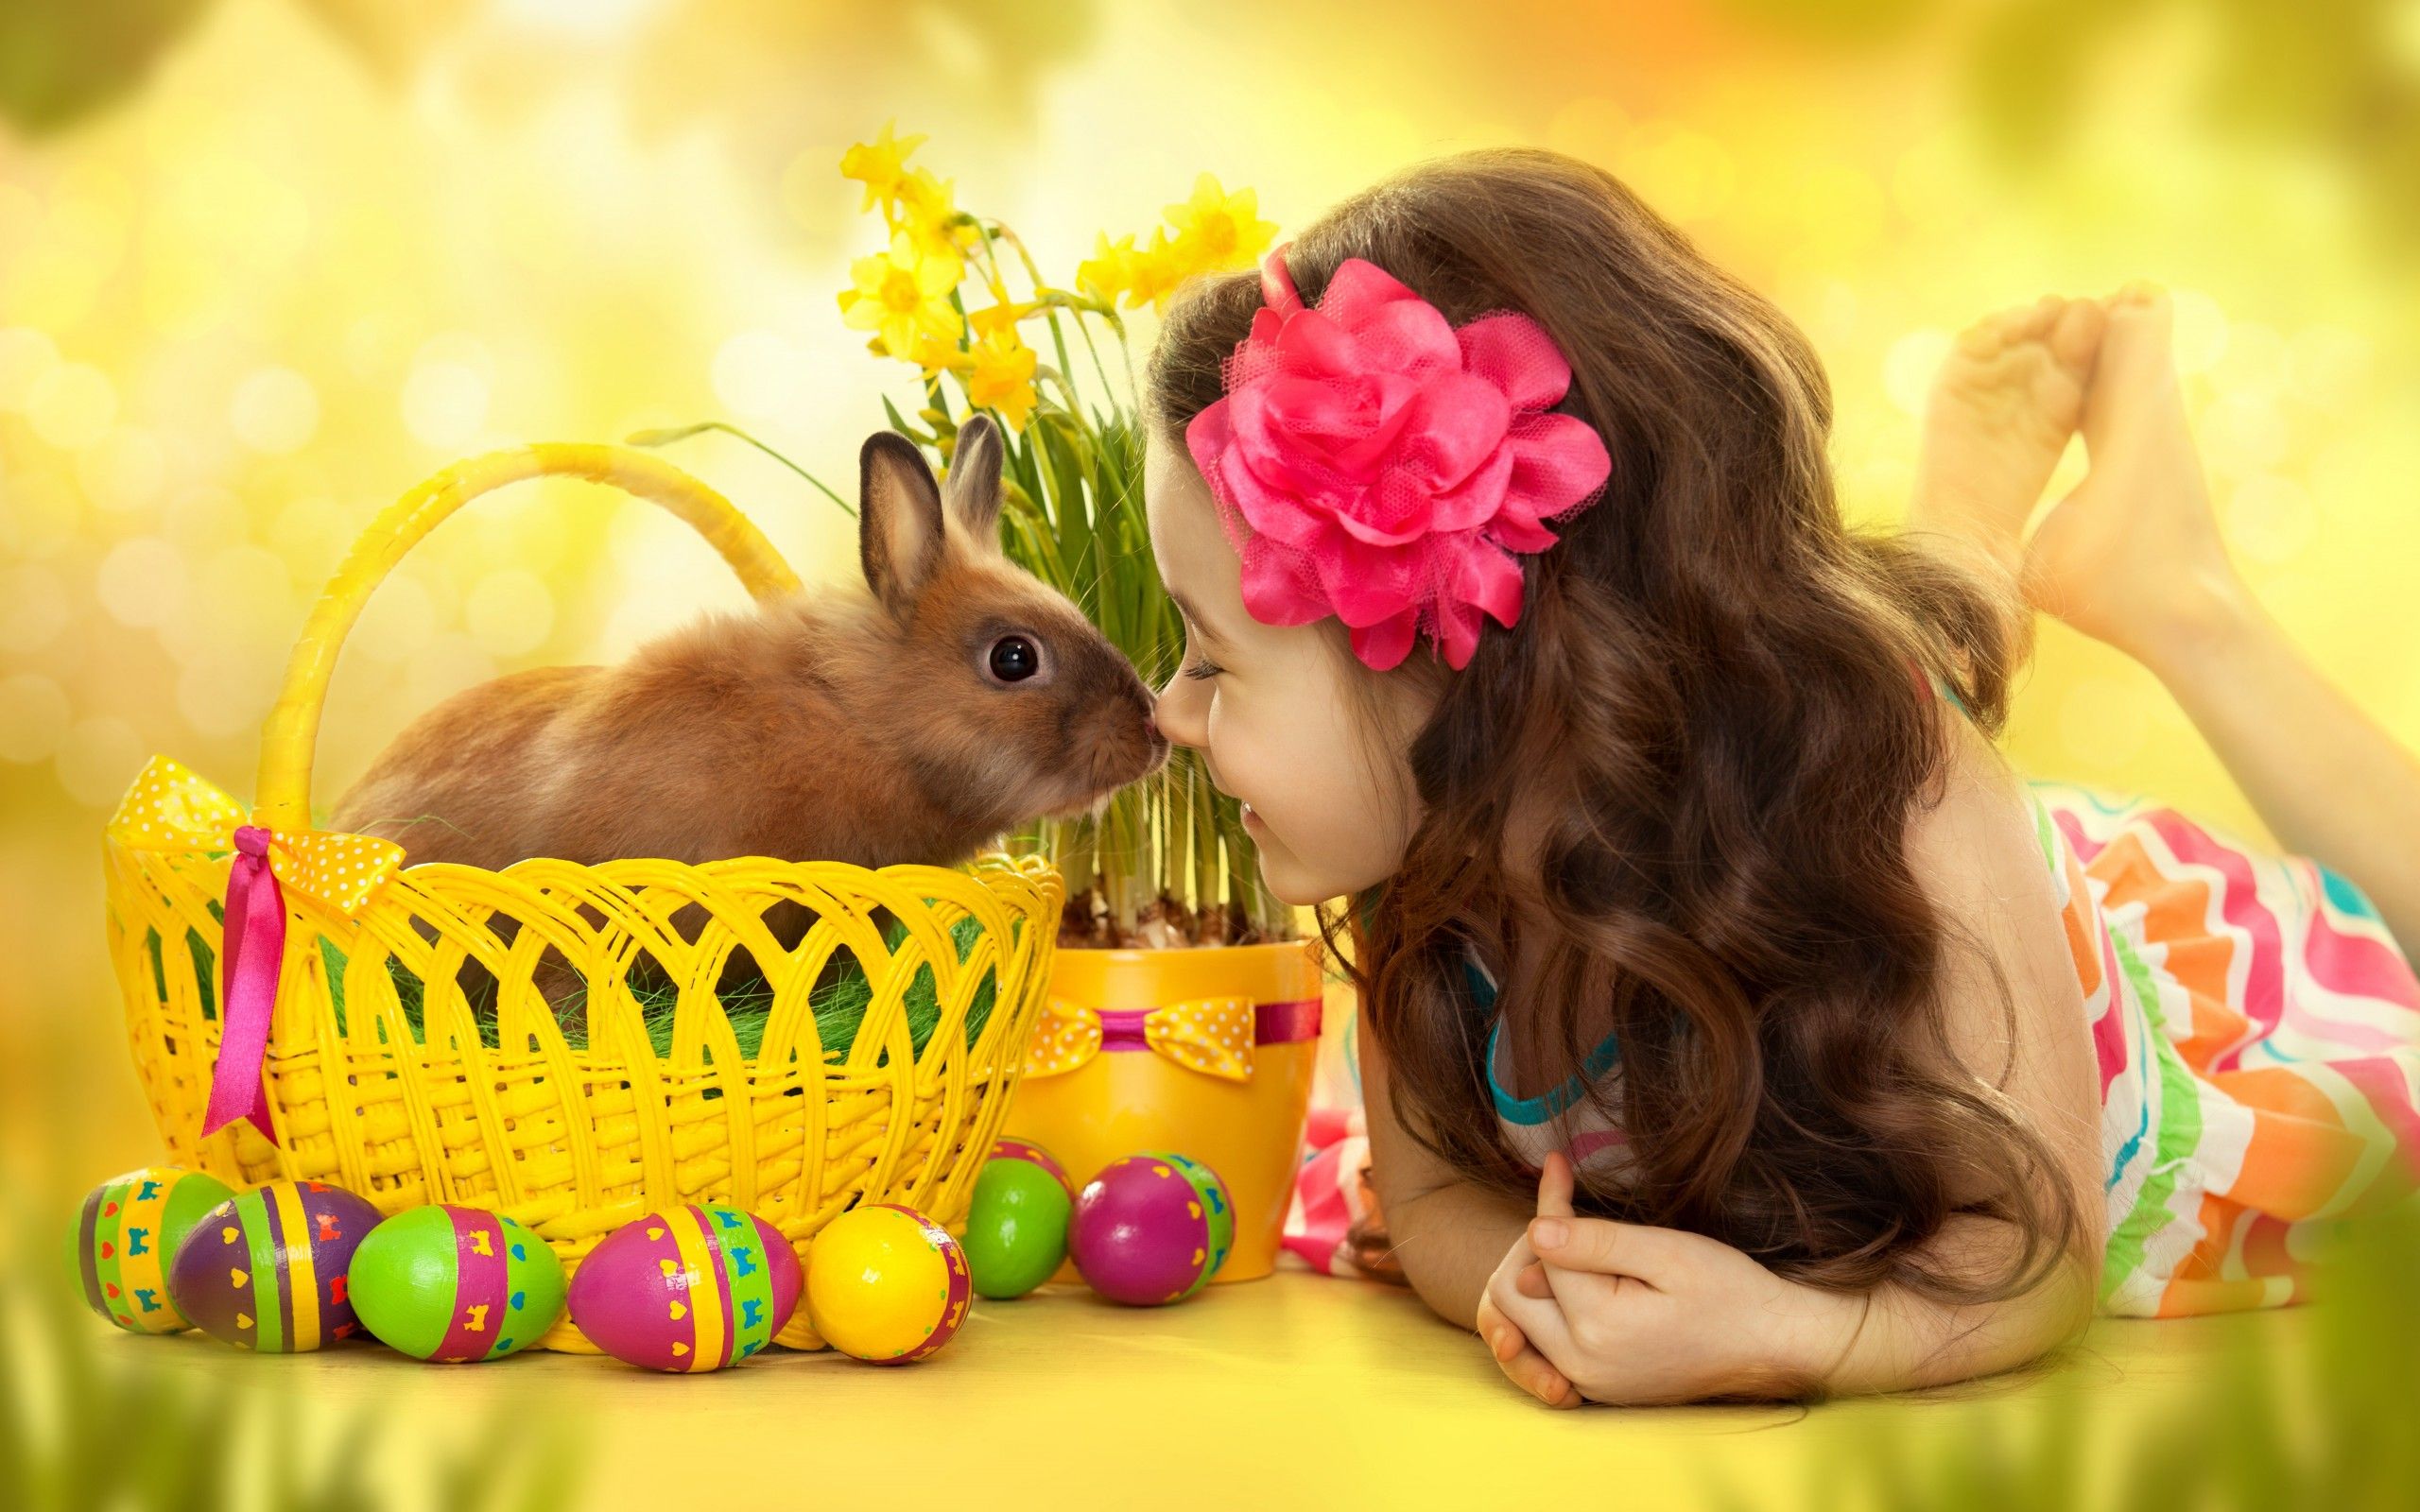 Wallpaper Easter Eggs, Easter Bunny, Cute girl, HD, Celebrations